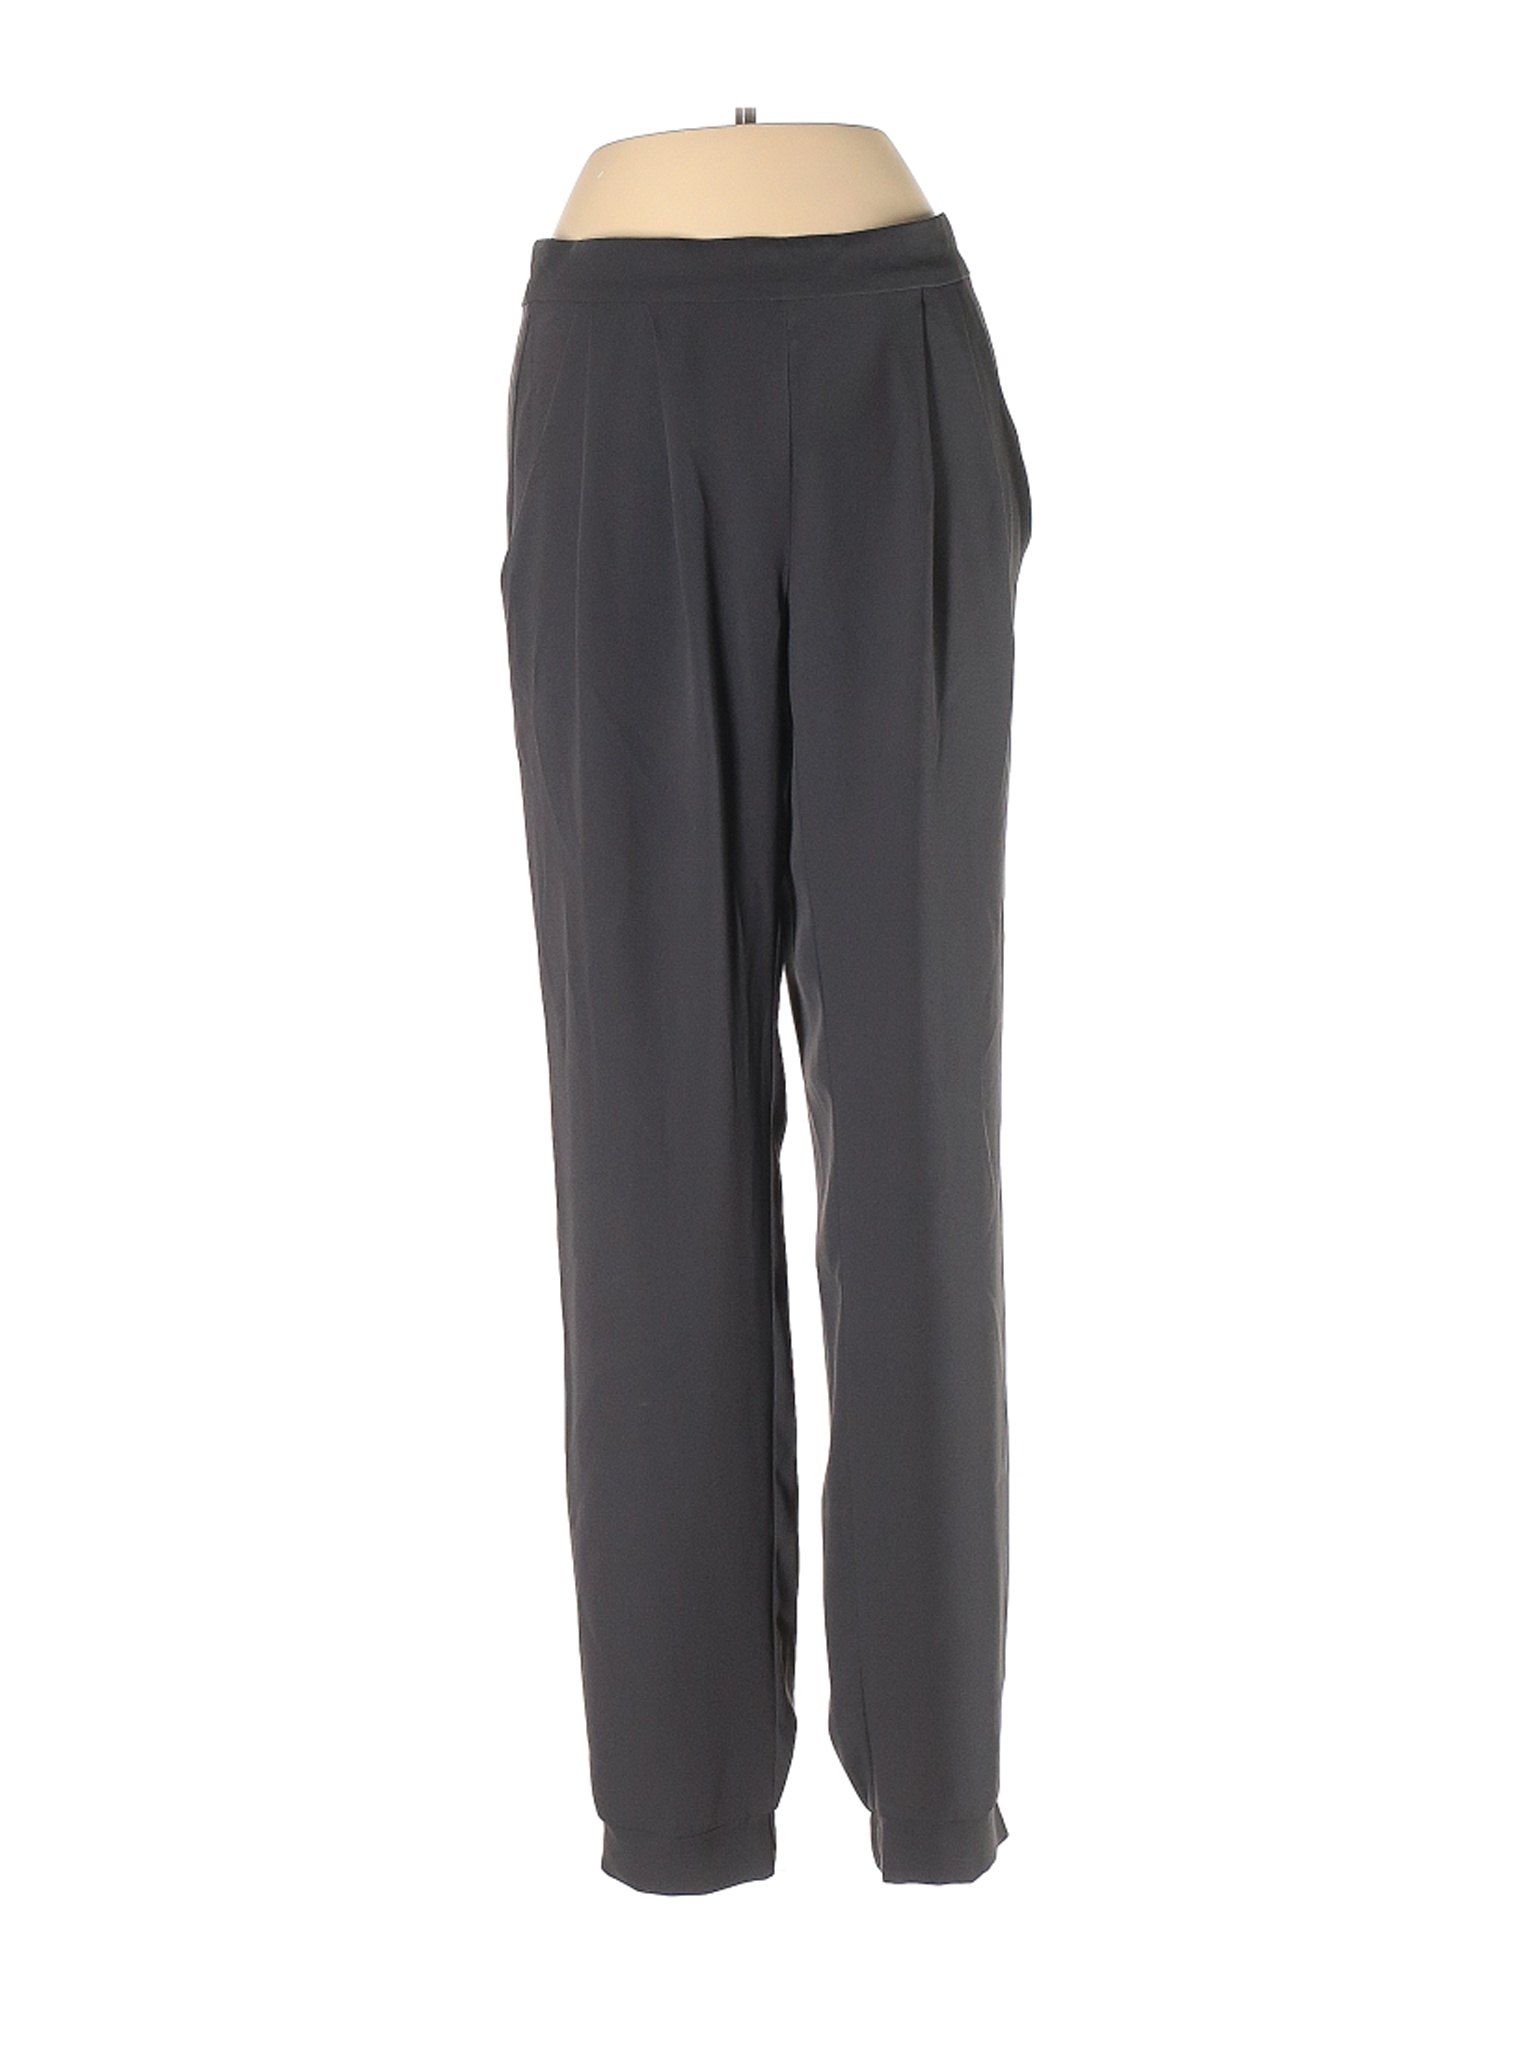 Lilla P Women Gray Casual Pants XS | eBay